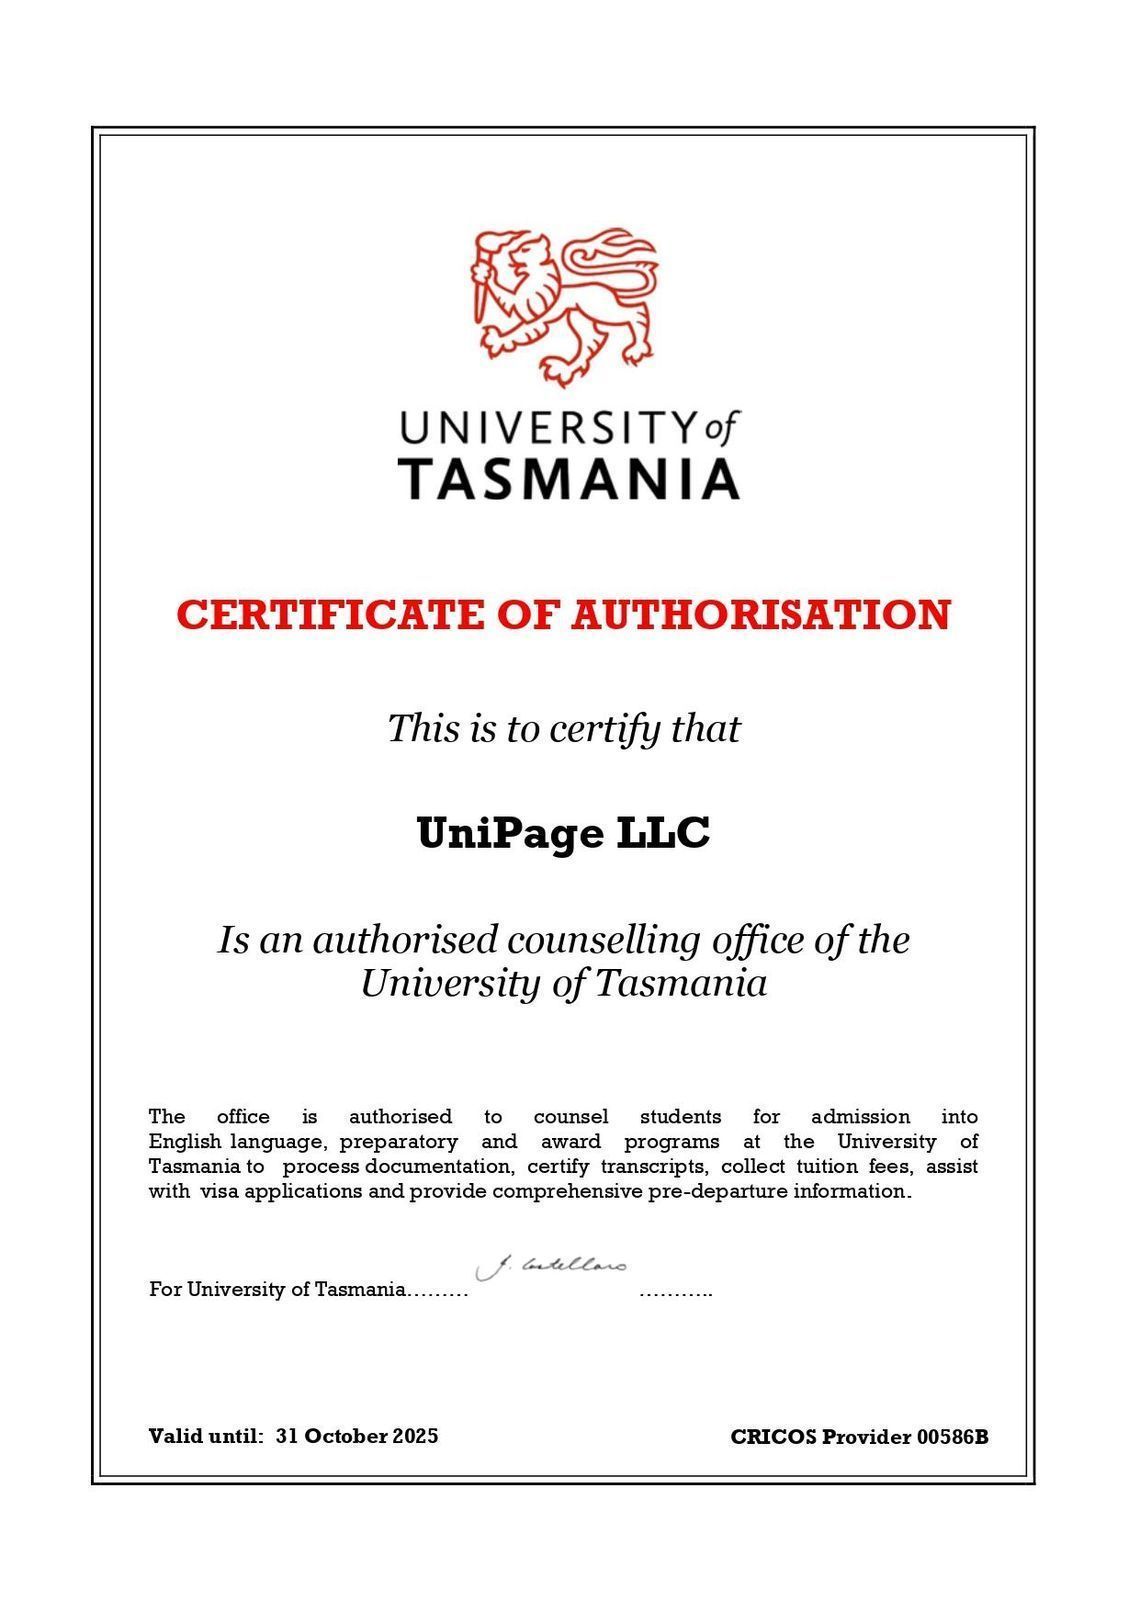 University of Tasmania Certificate of Authorisation